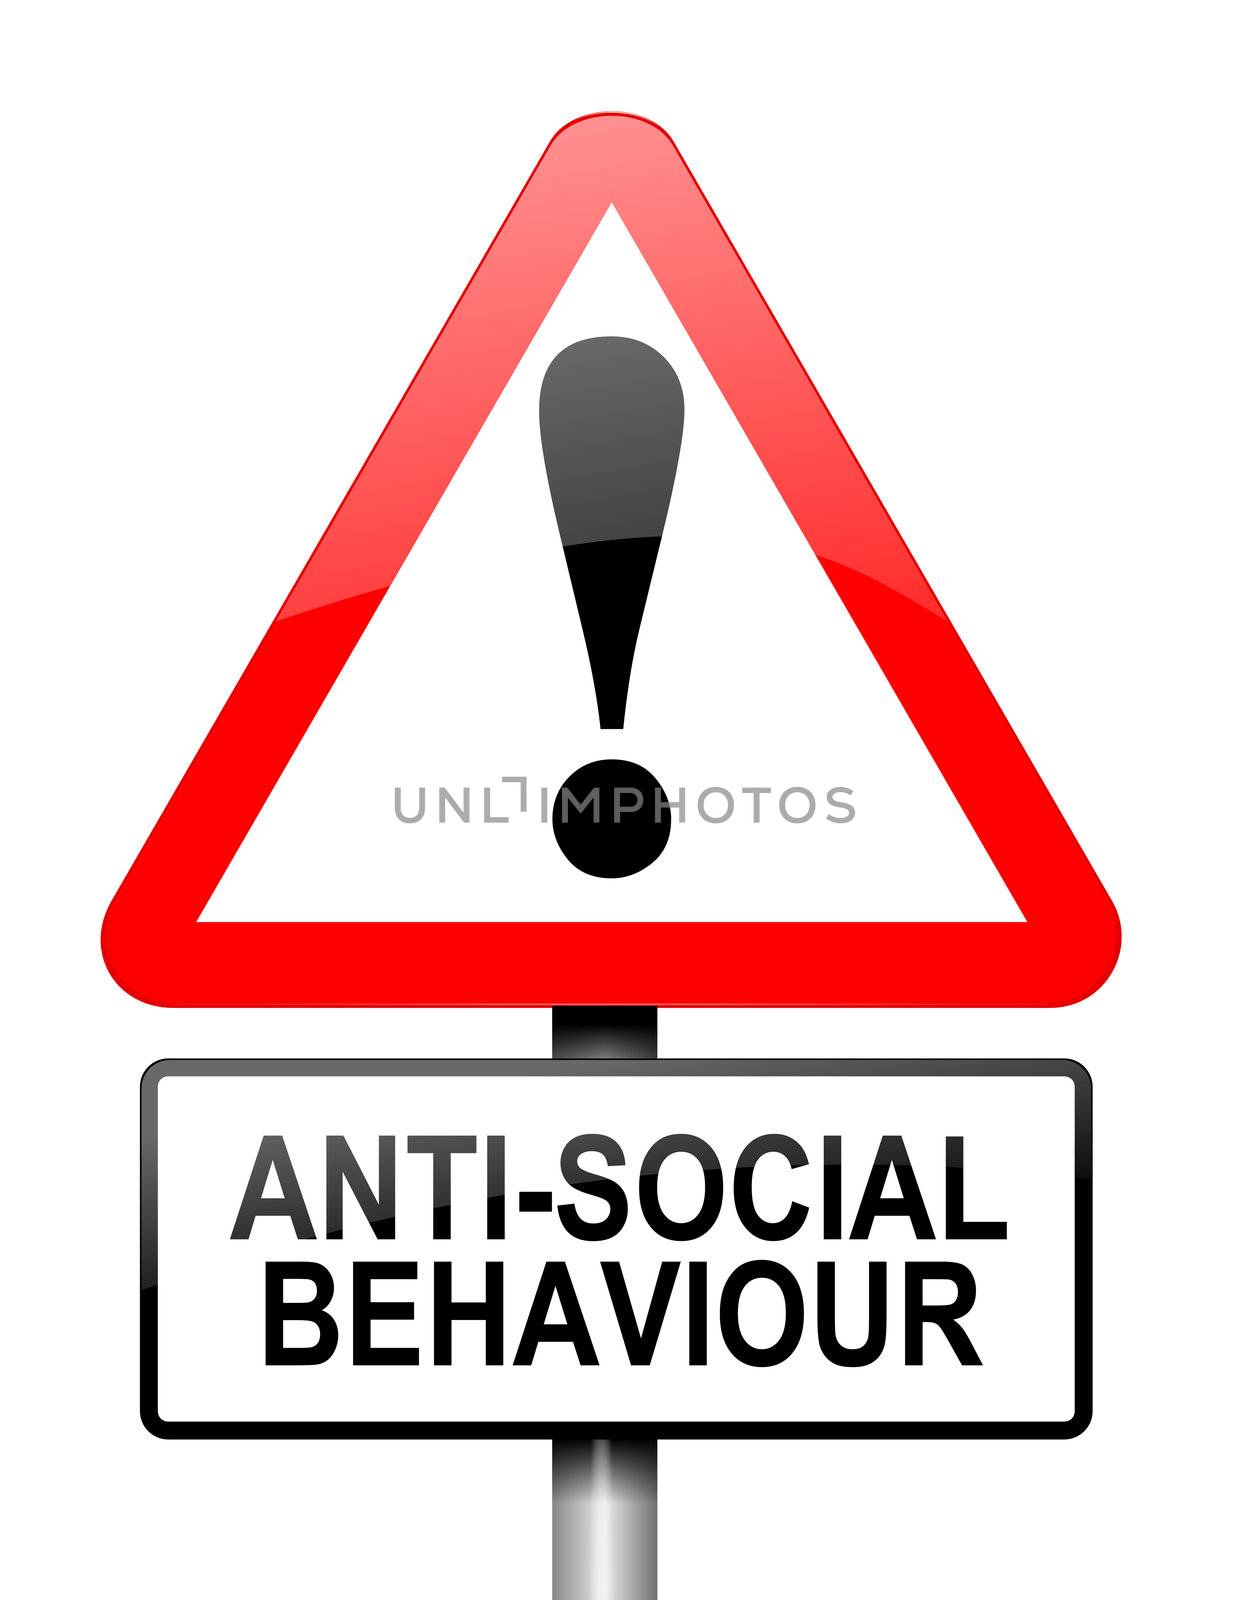 Anti-social behaviour warning. by 72soul